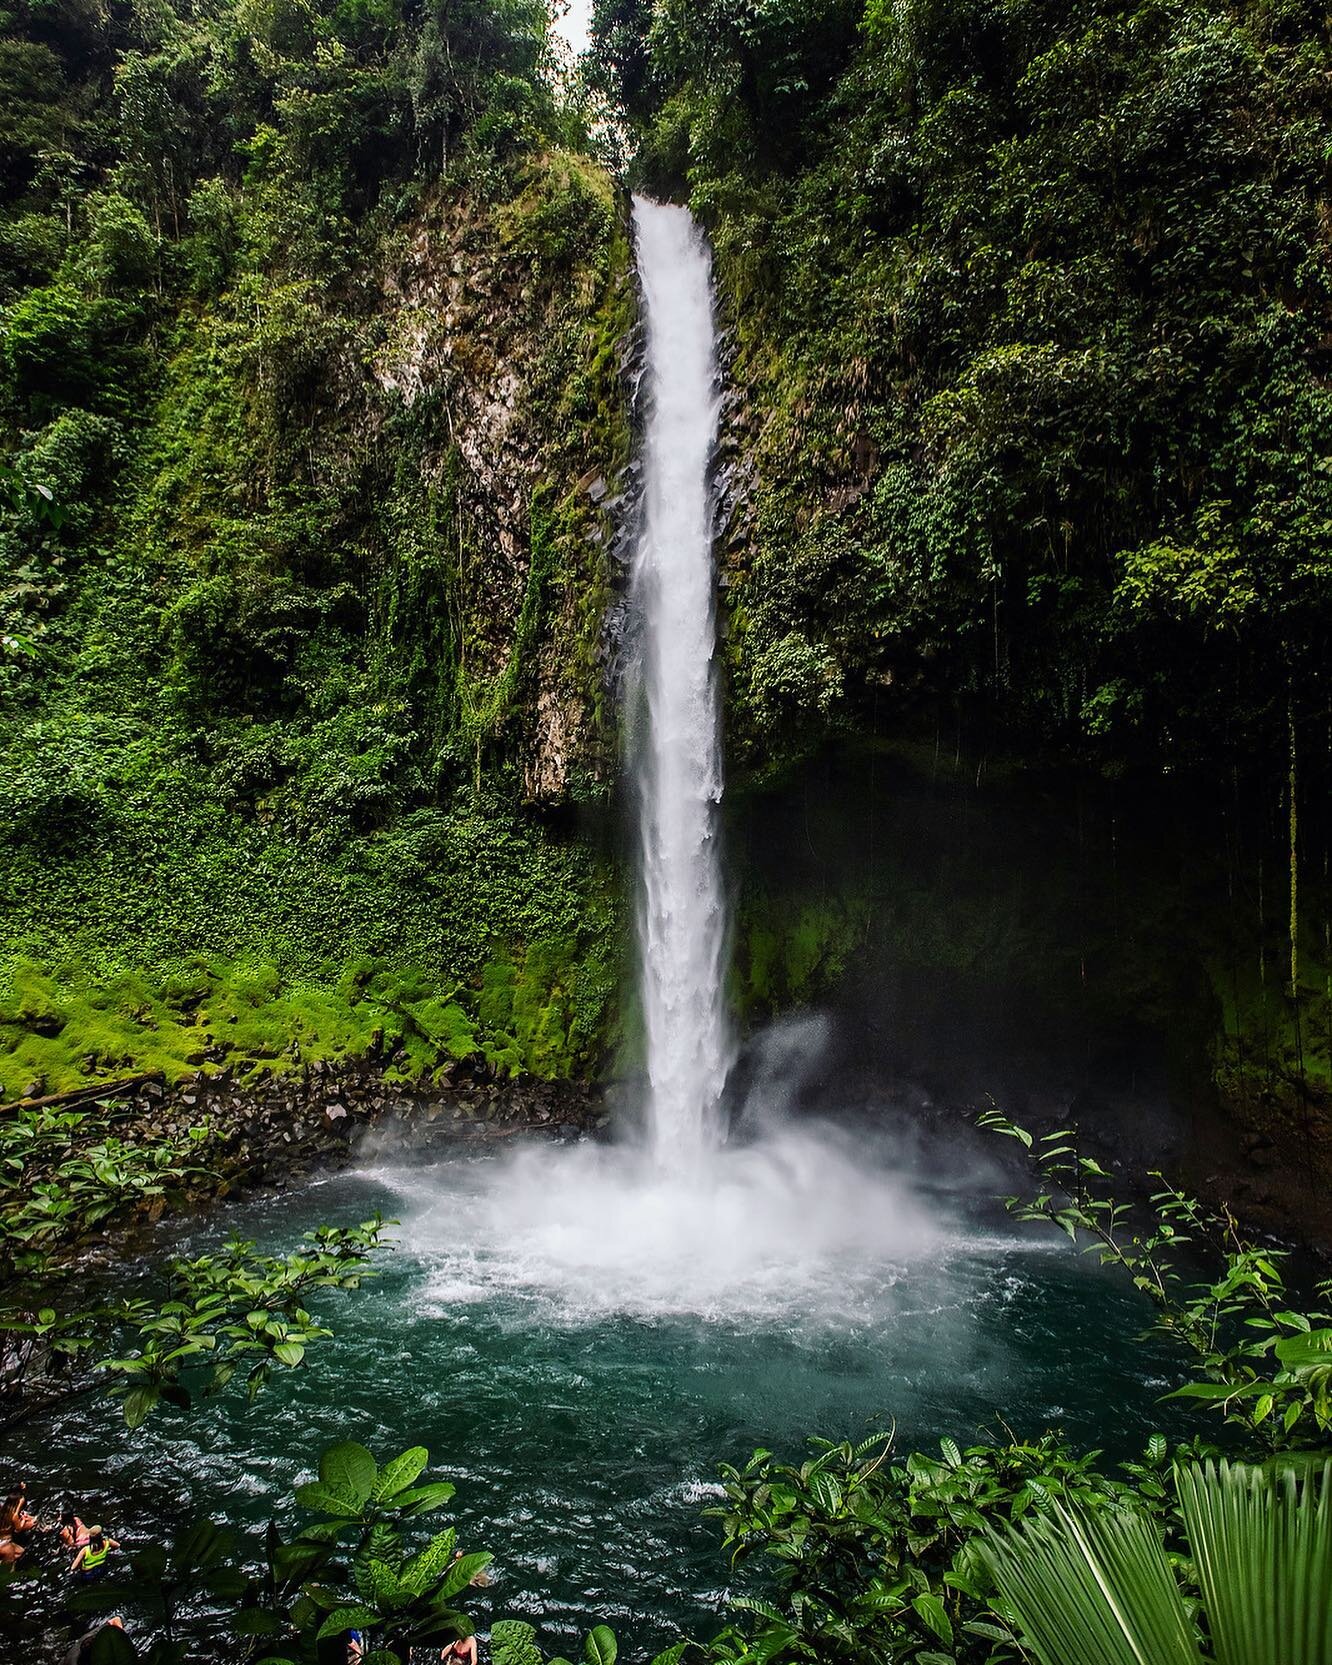 Powerful and majestic La Fortuna Waterfall in Costa Rica 2023 💚💦
.
.
.
.
.
.
.
.
.
.
.
#travelphotography #nature #waterfall #costarica #lafortuna #paradise #hike #explore #photography #travel #rainforest